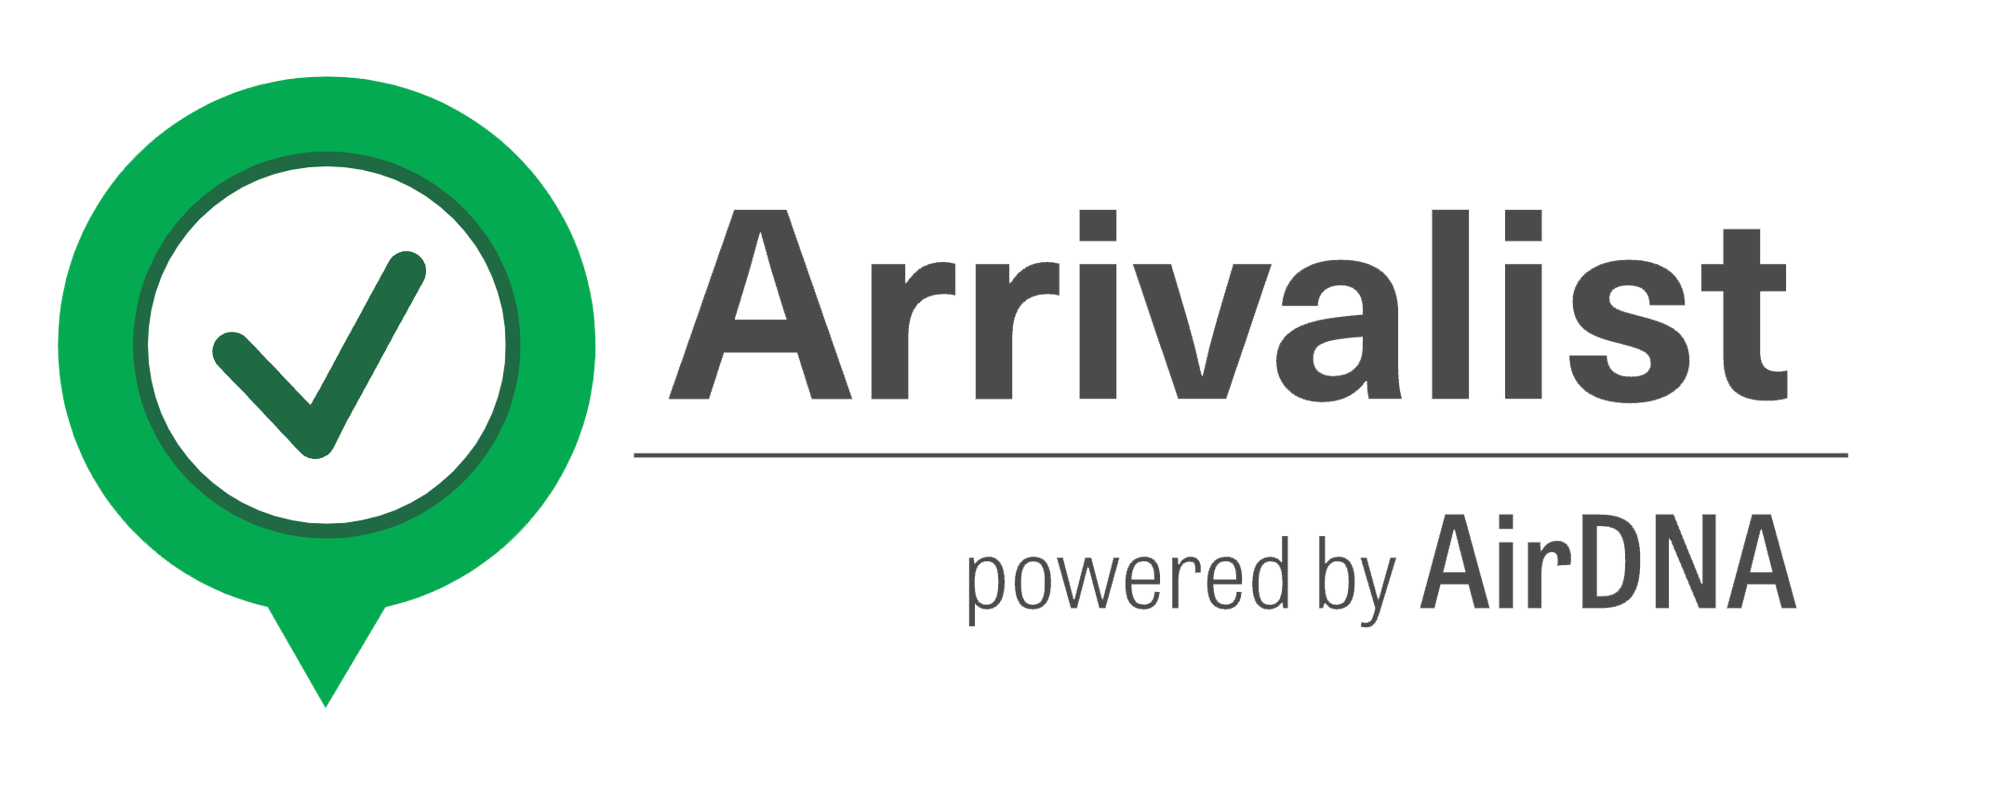 arrivalist logo